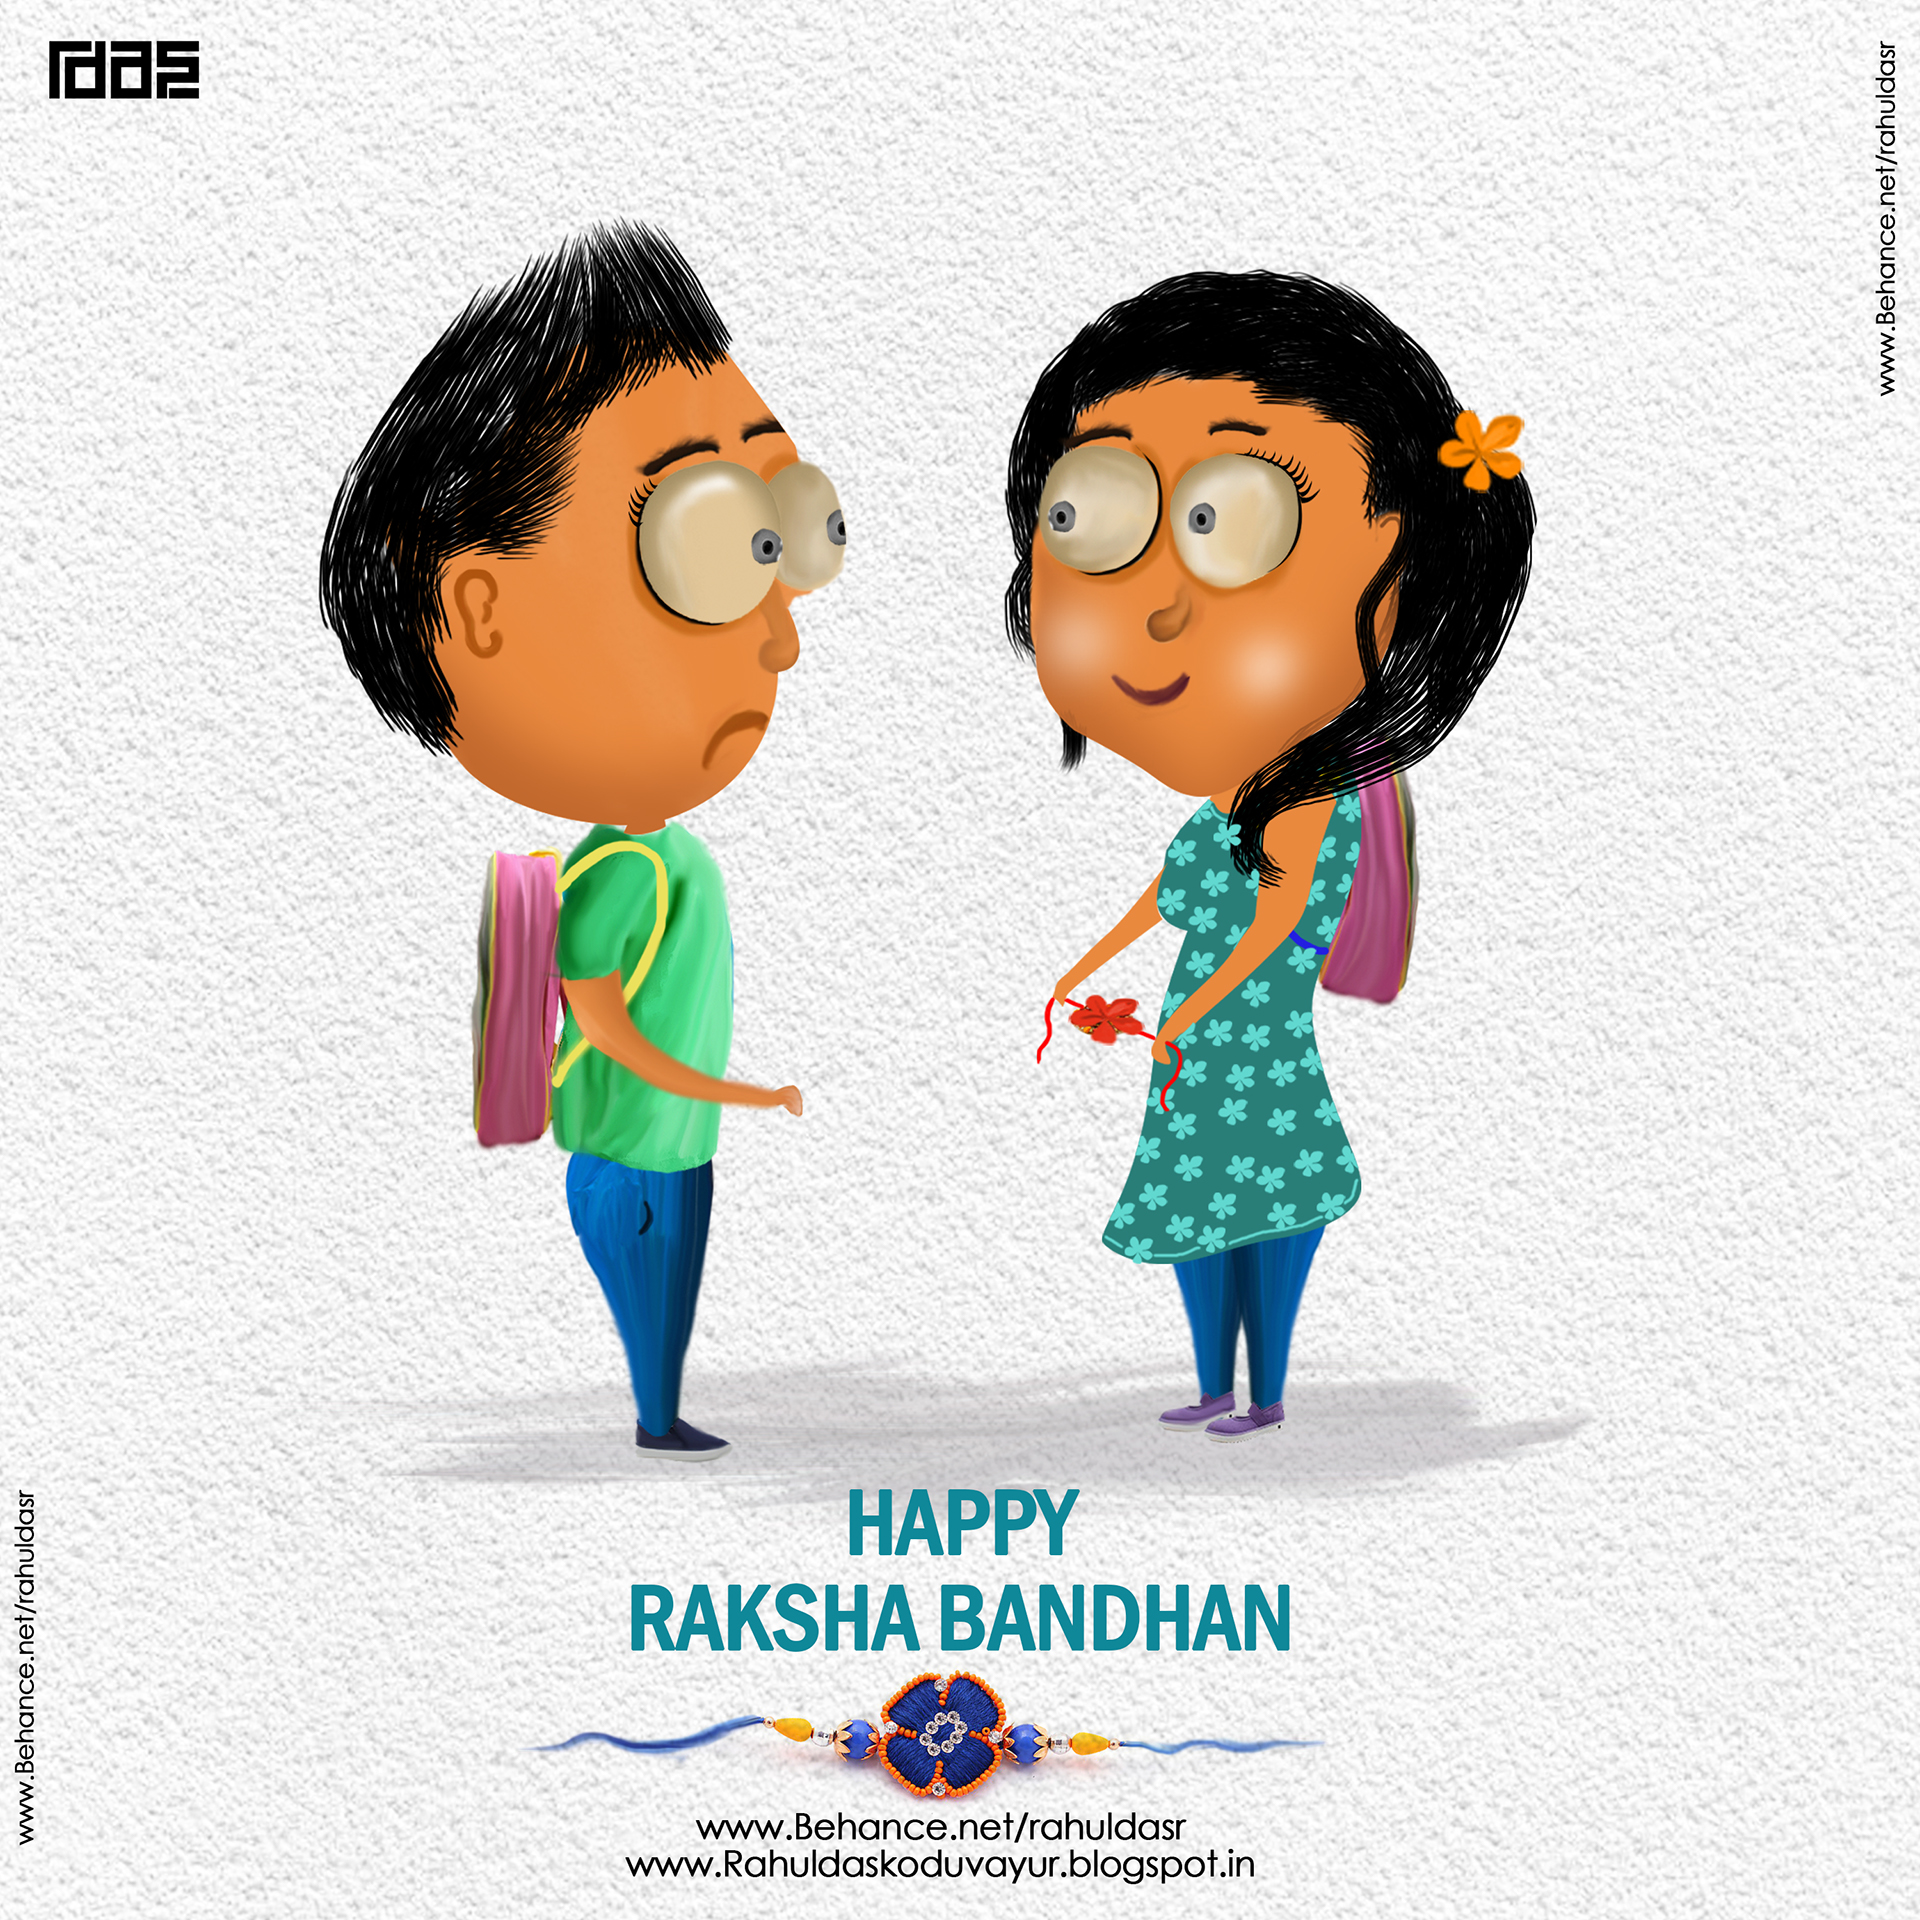 Raksha Bandhan Illustration | Behance